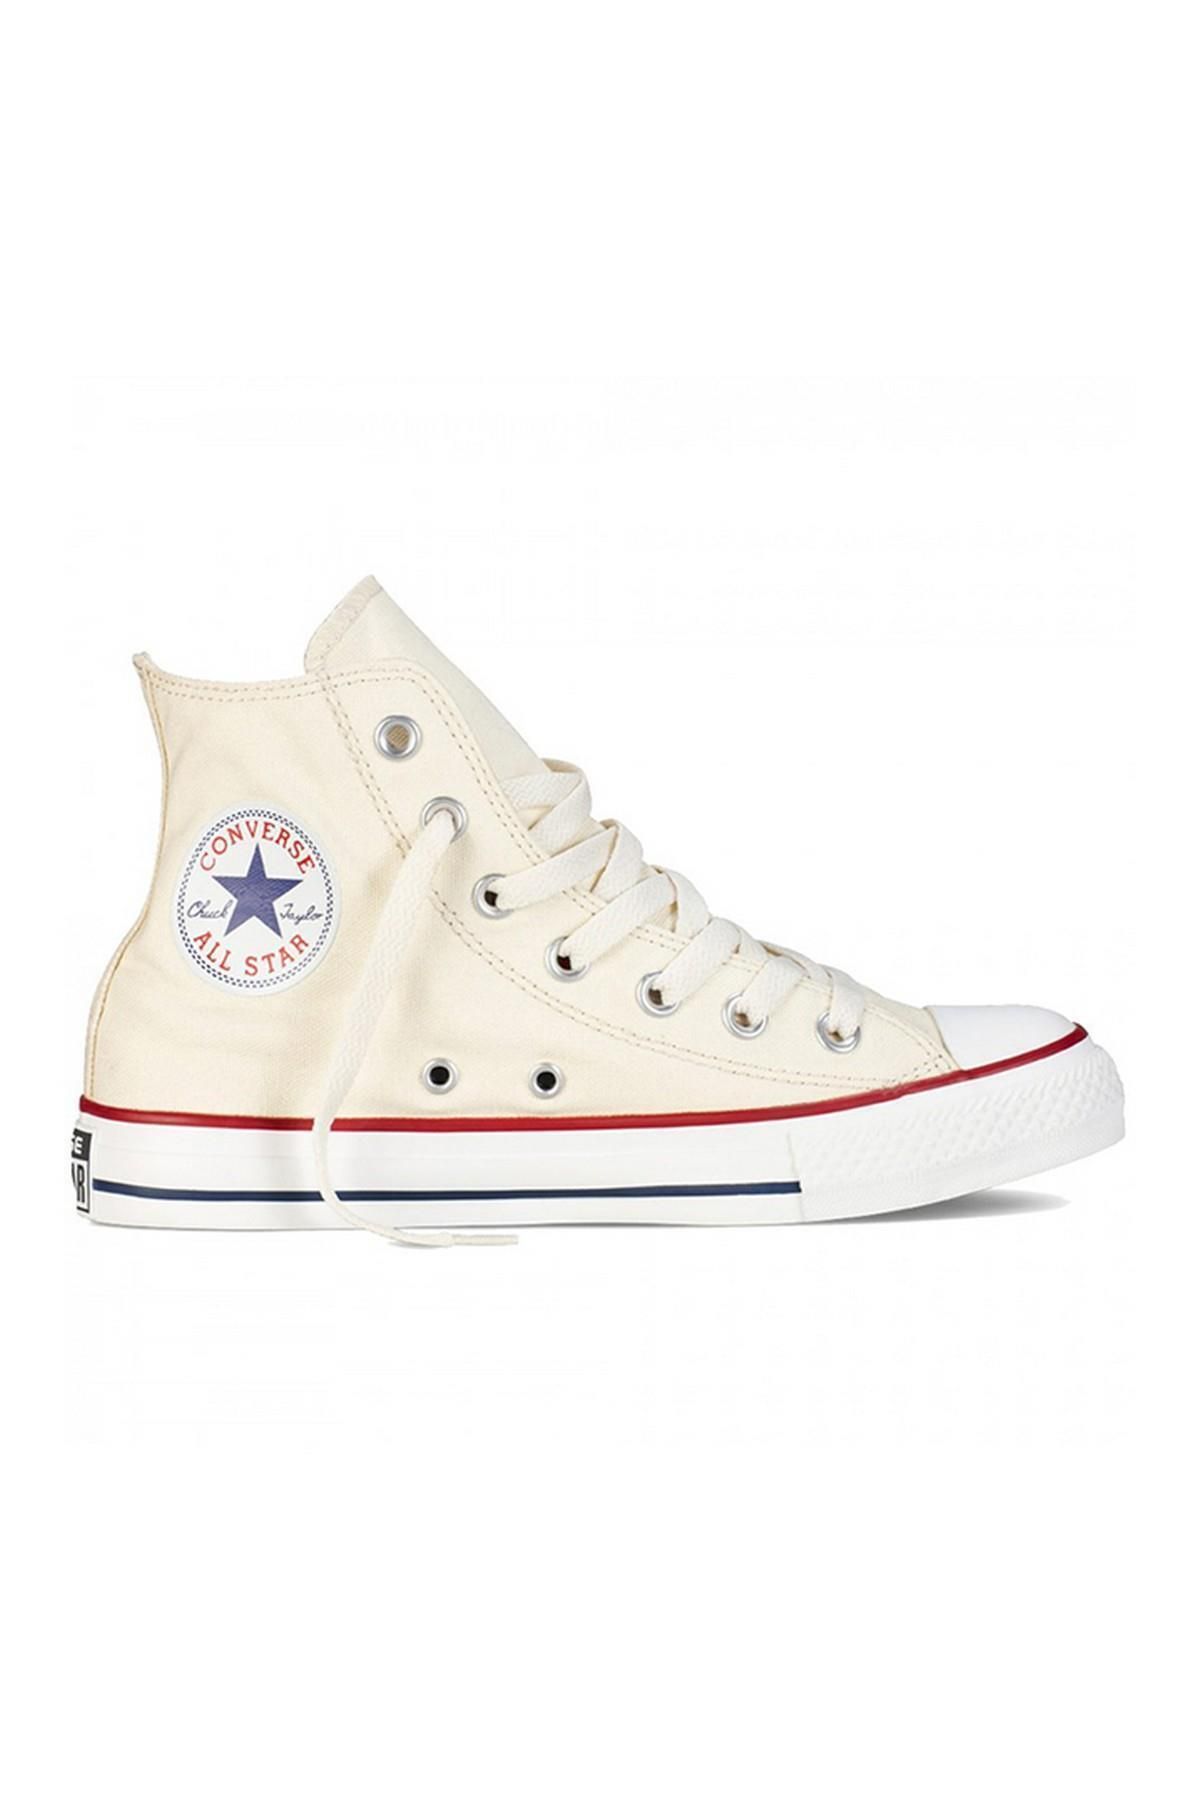 Converse M9162c - Chuck Taylor All Star Mid Unisex Sneaker Ayakkabı